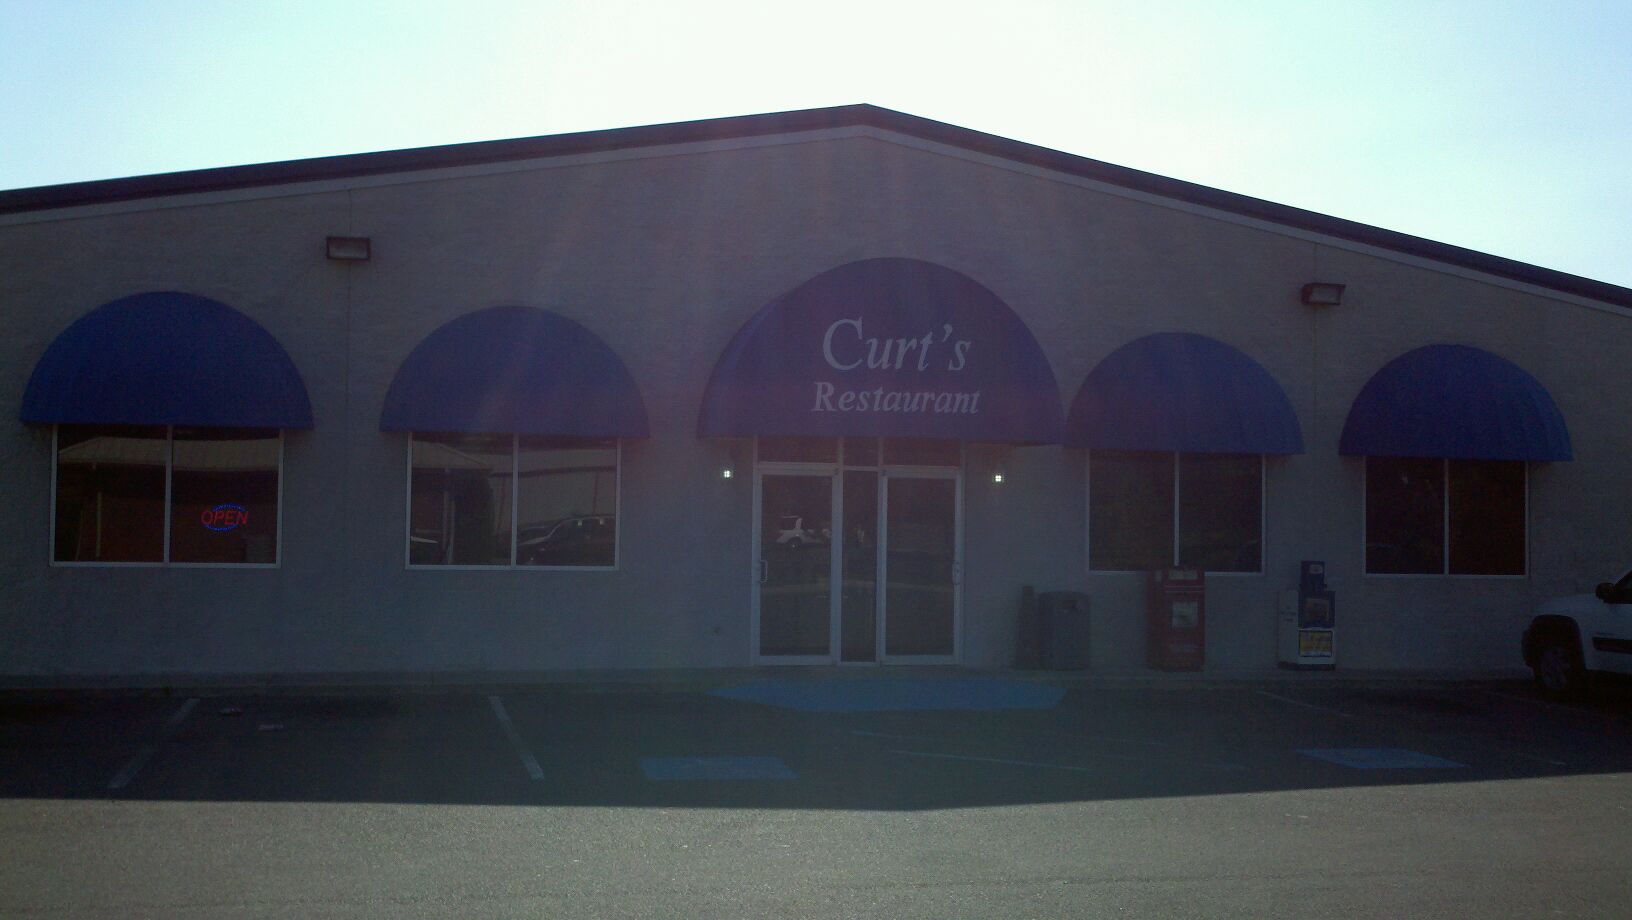 Curt's Restaurant